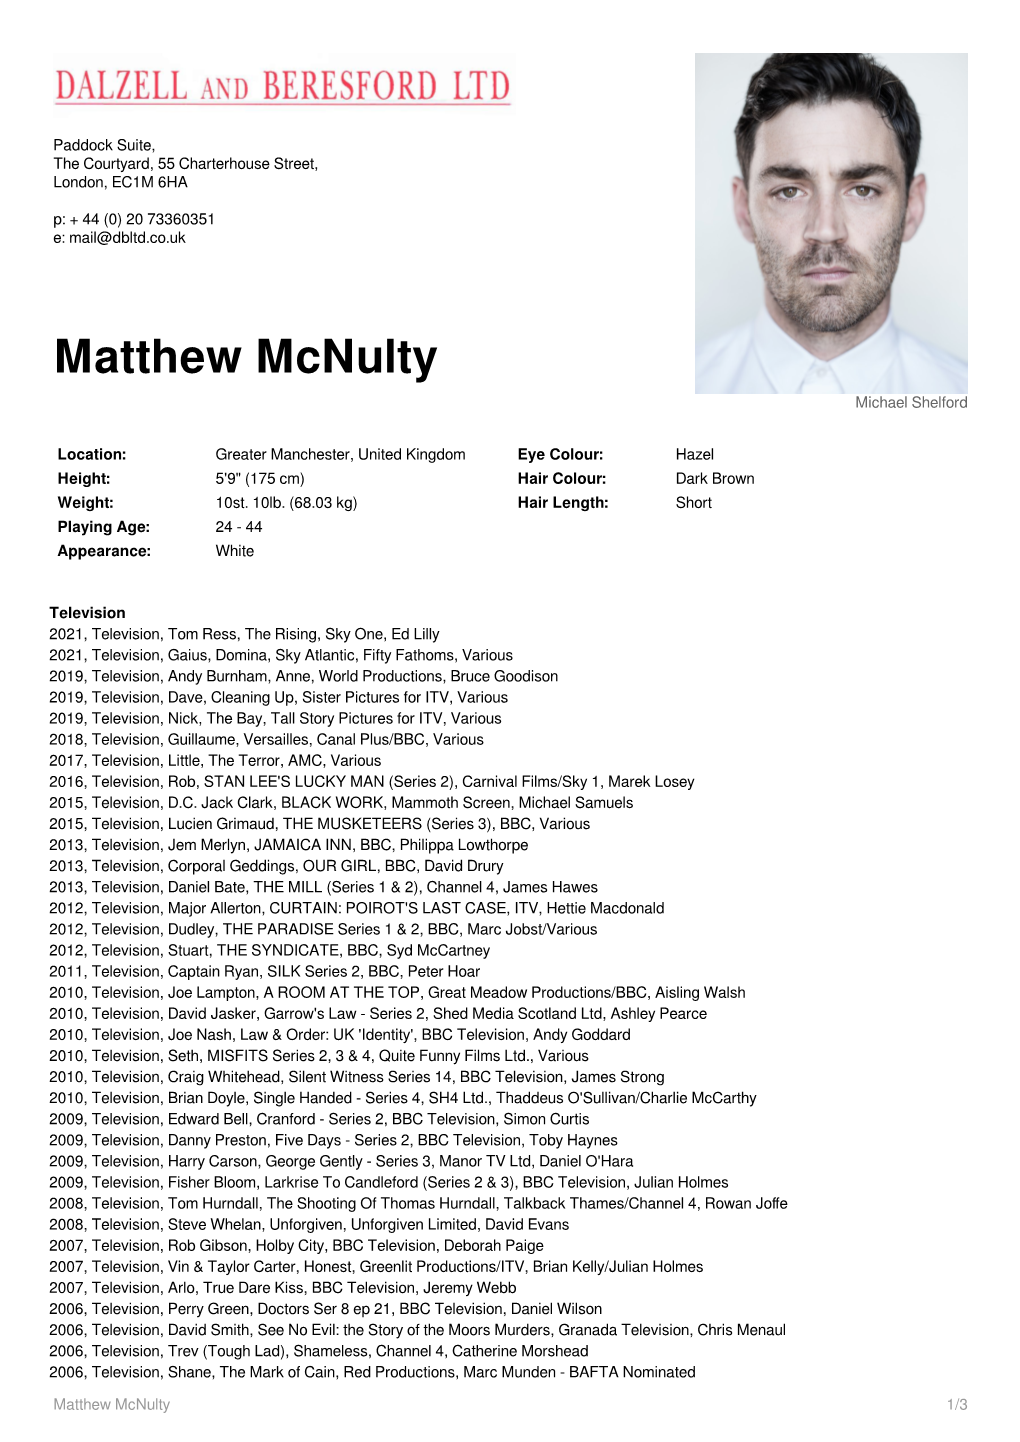 Matthew (Michael) Mcnulty